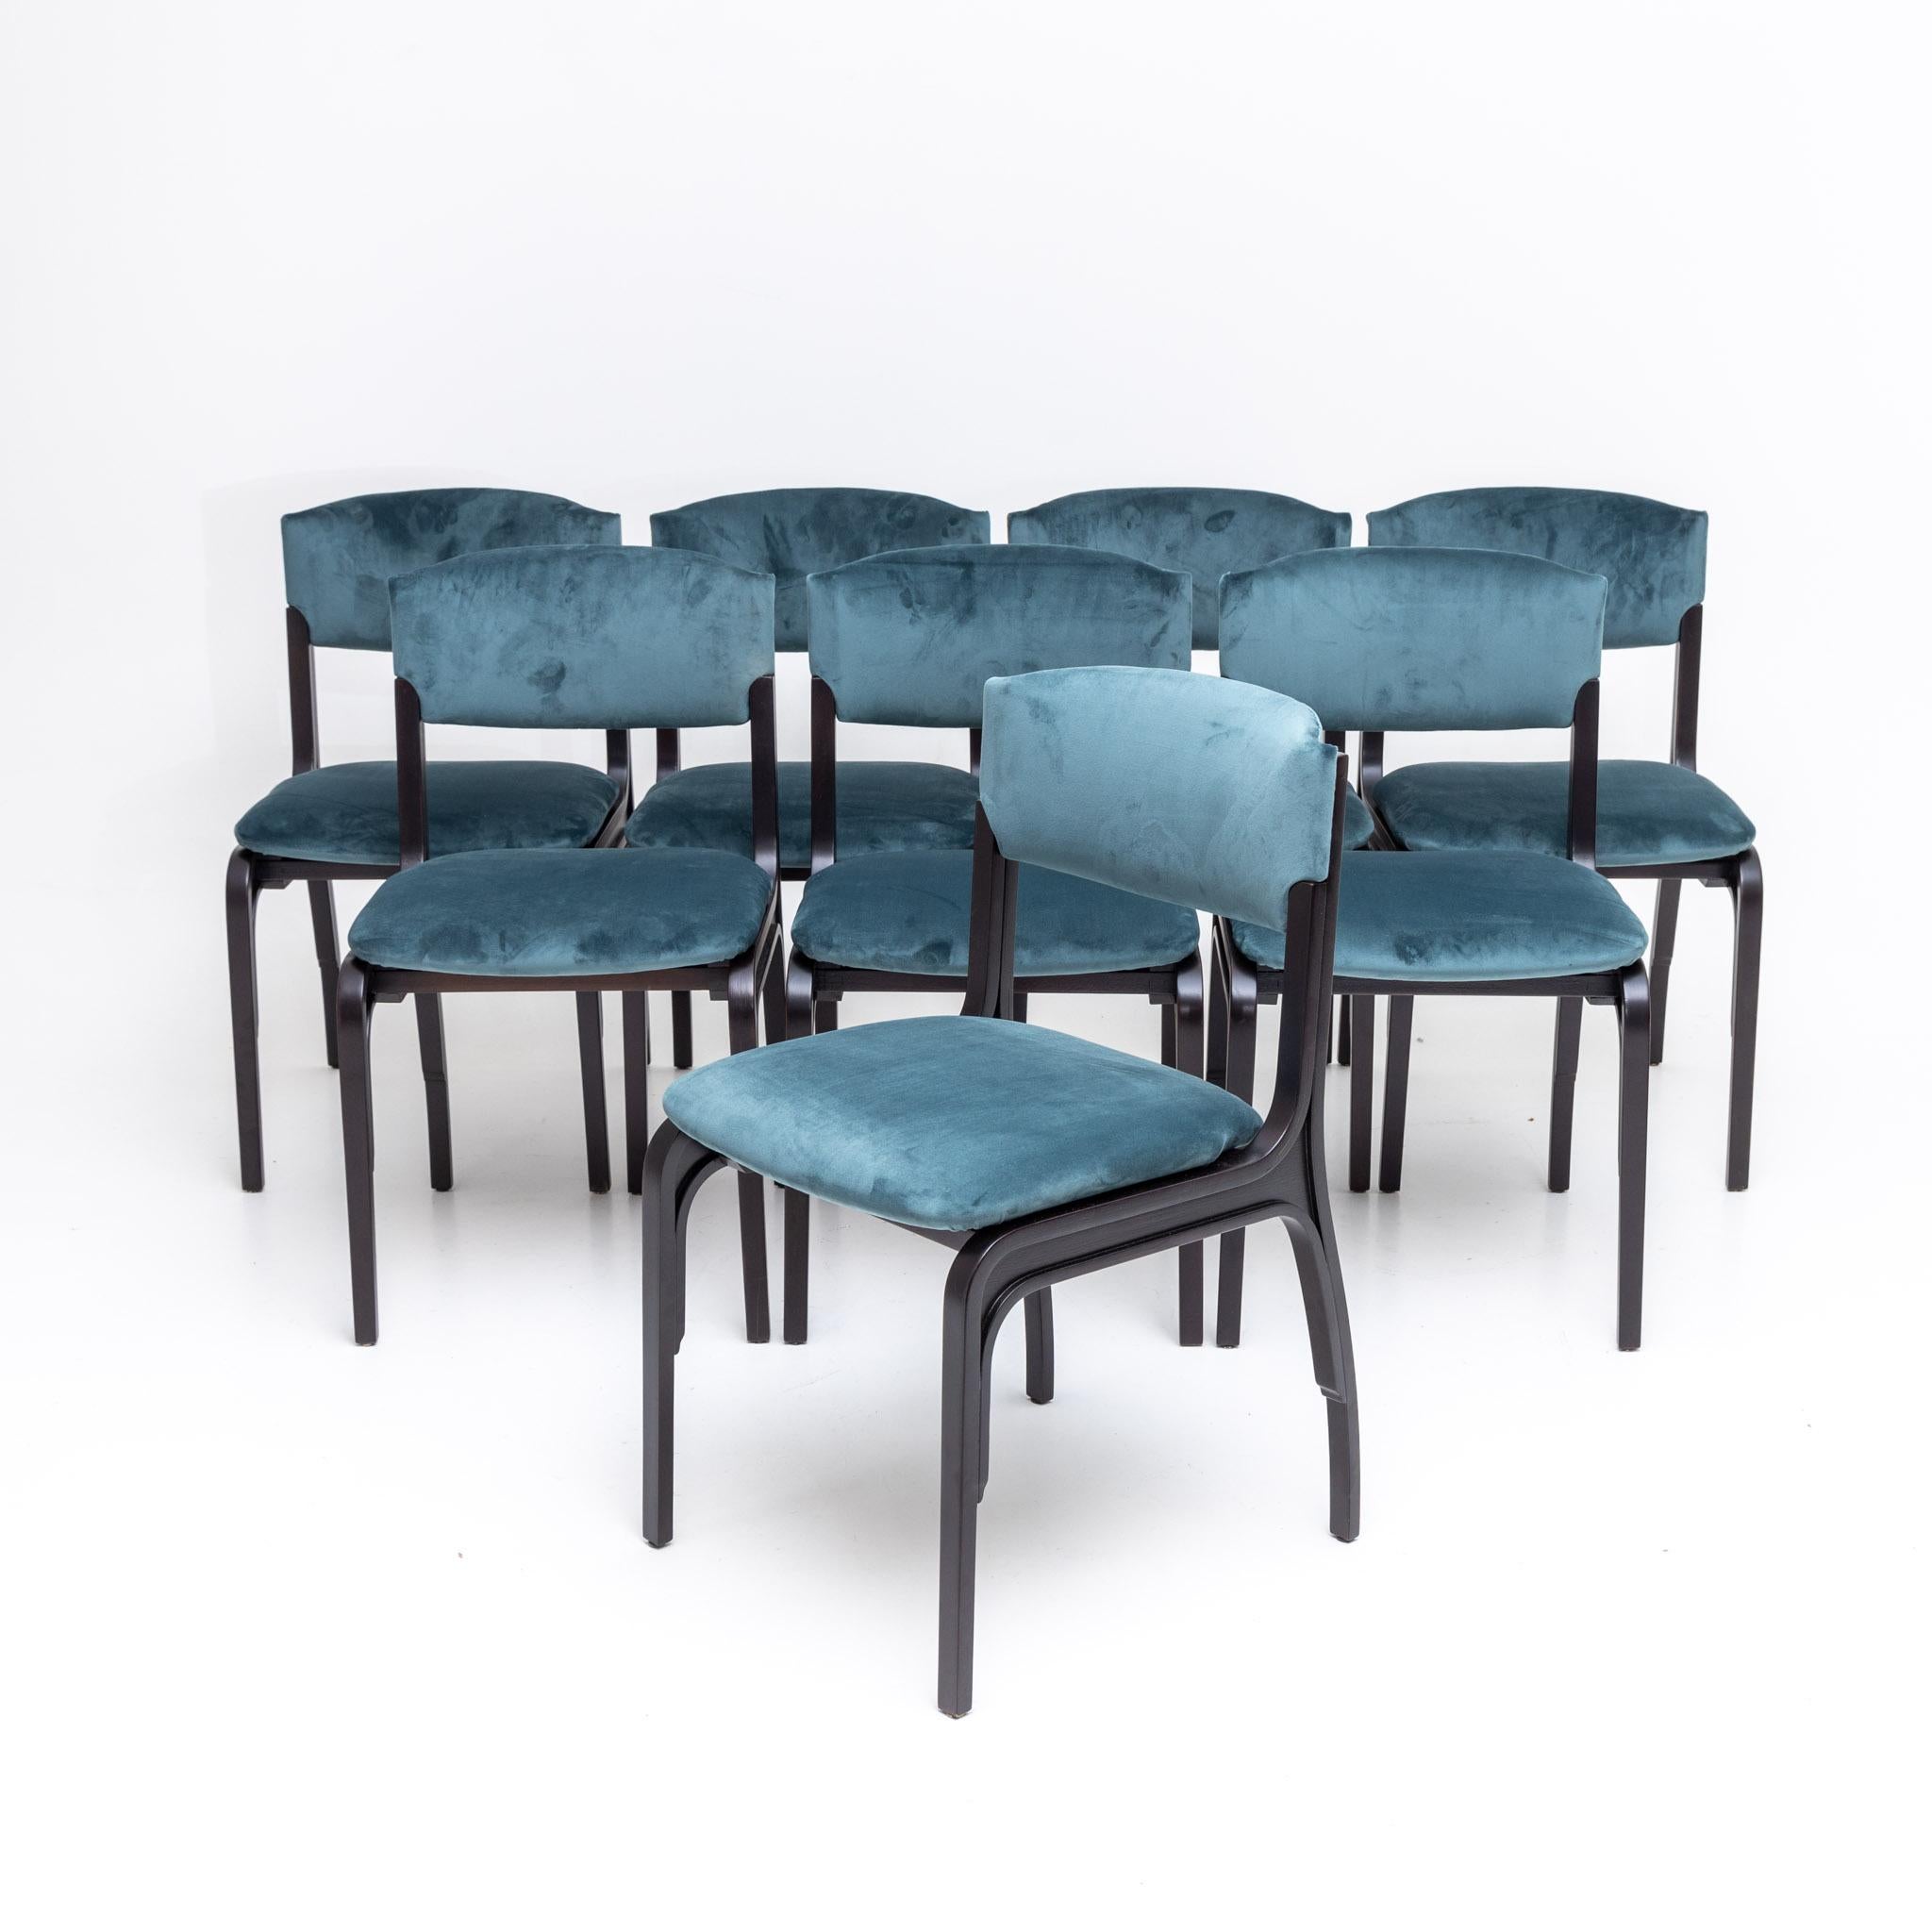 Set of eight ebonized dining chairs upholstered in blue velvet. Restored and reupholstered.